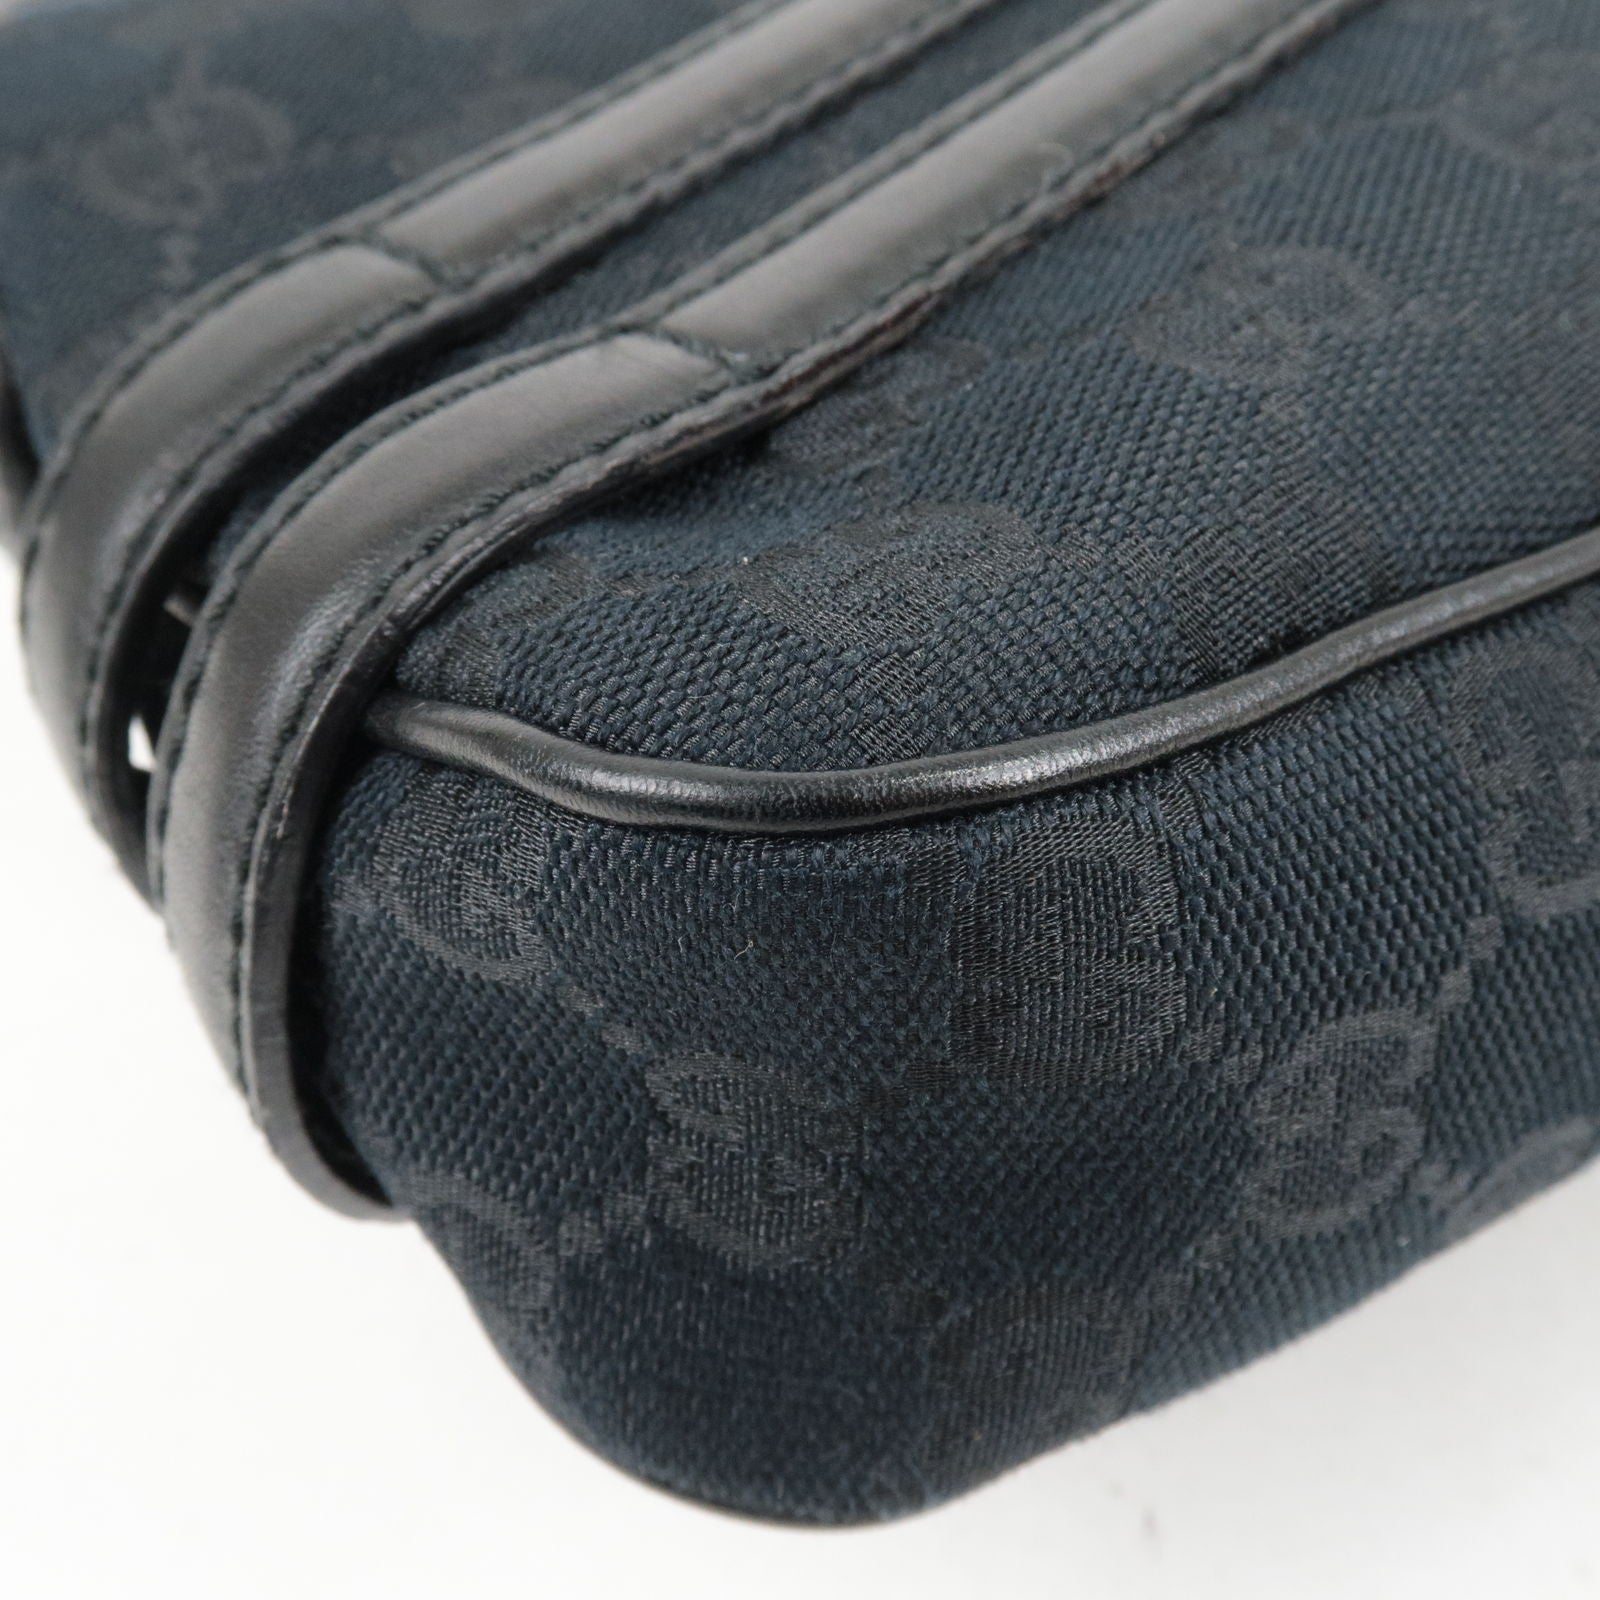 Gucci, Bags, Vintage Canvas Gg Black Gucci Shoulder Bag